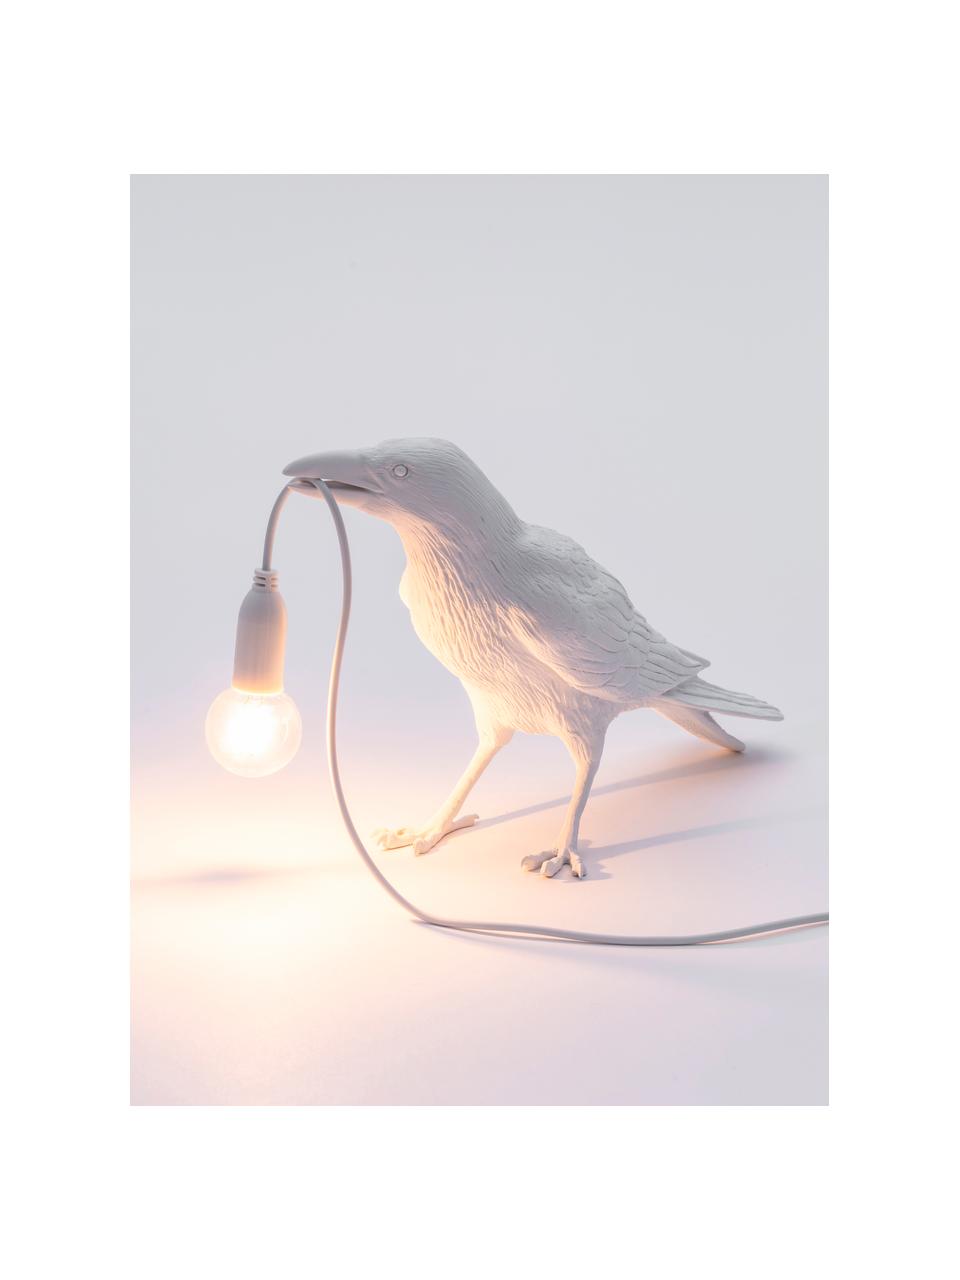 Design tafellamp Bird, Wit, B 33 x H 12 cm